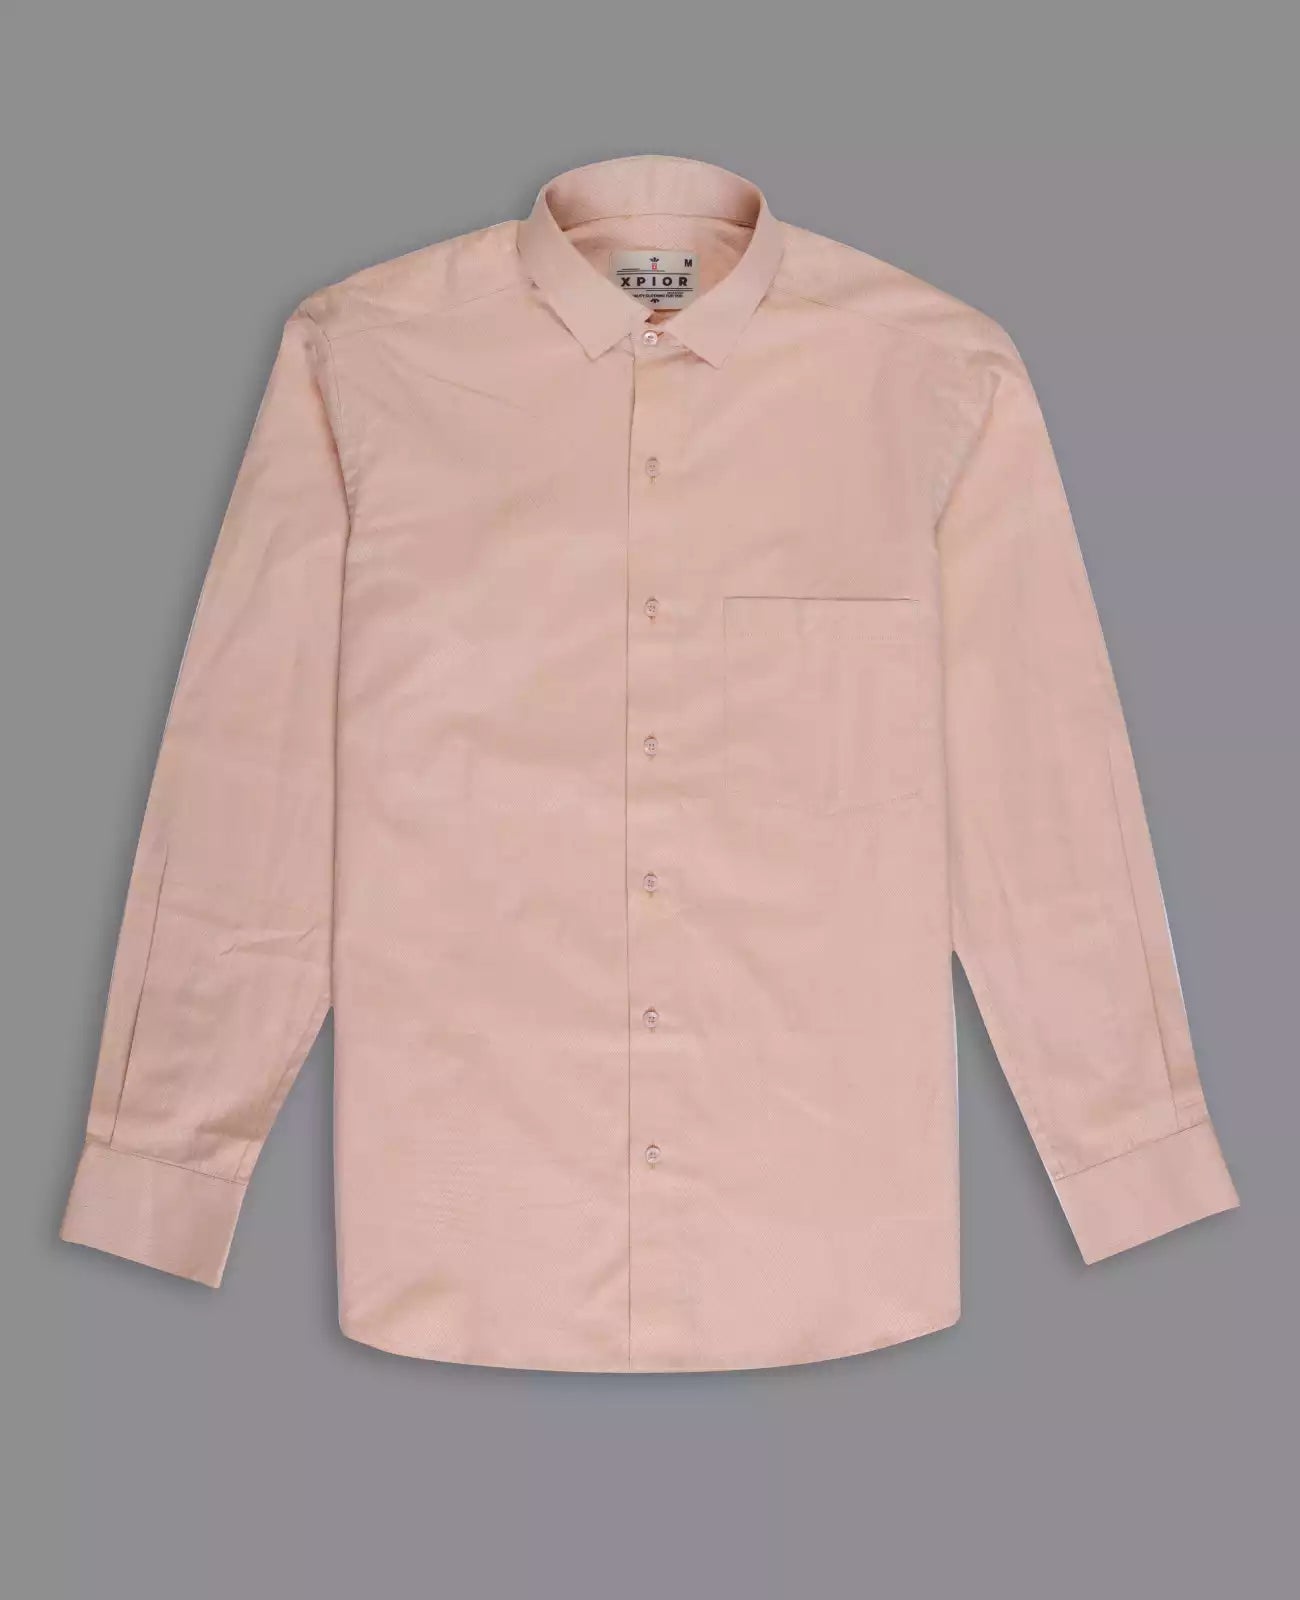 Men's full sleeves plain shirt premium collection cotton fabric peach